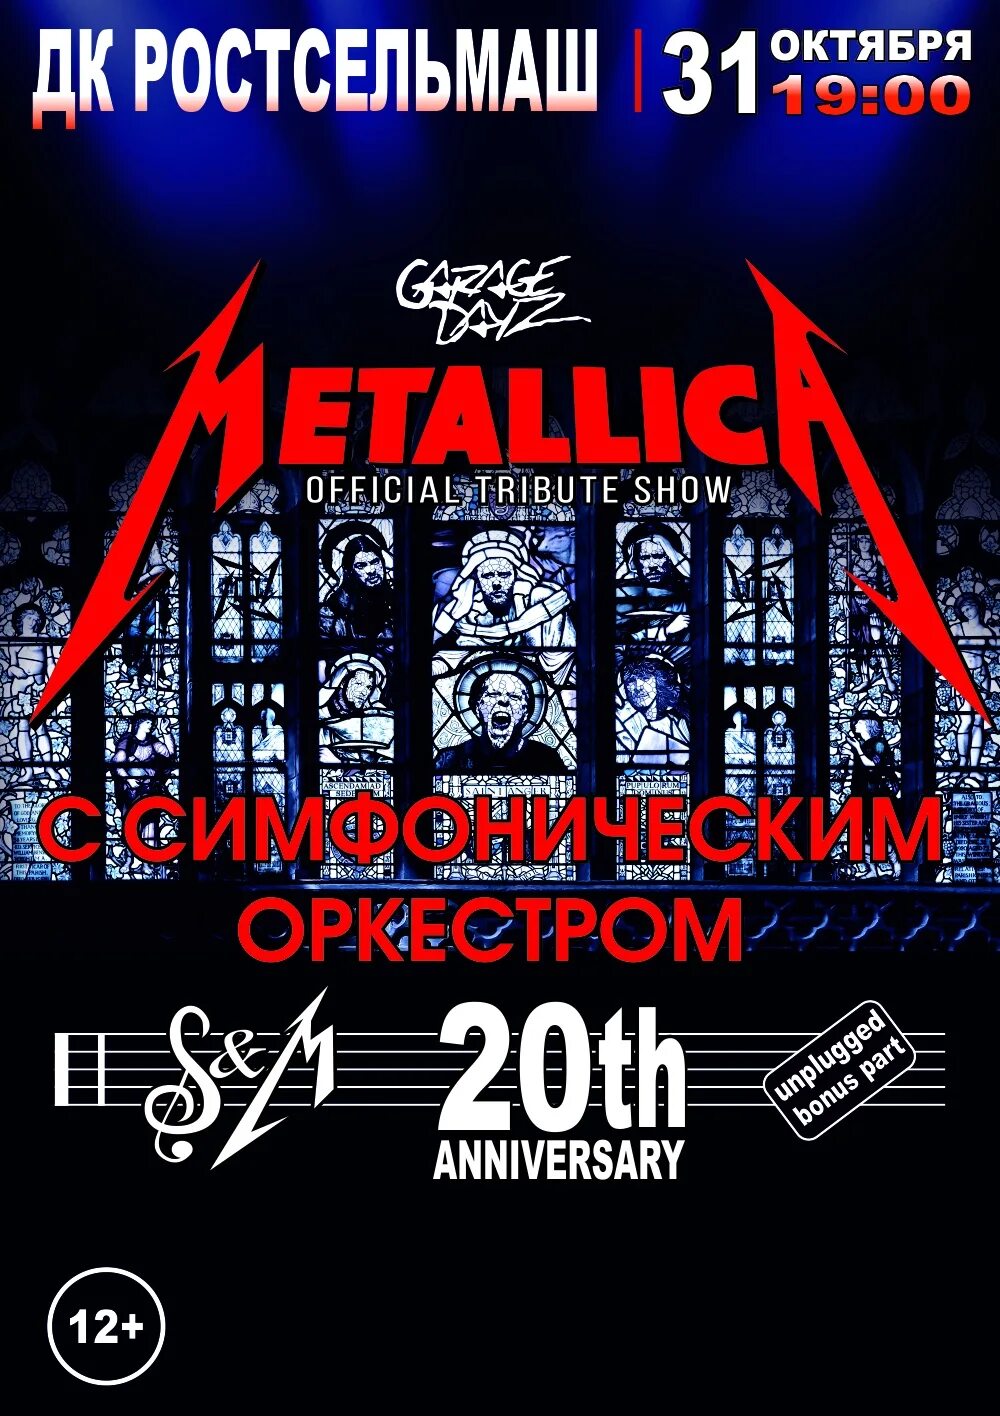 Феникс сеансы ростов. Metallica афиша. Metallica show s&m. Афиша концерта металлика. Афиша Metallica show.